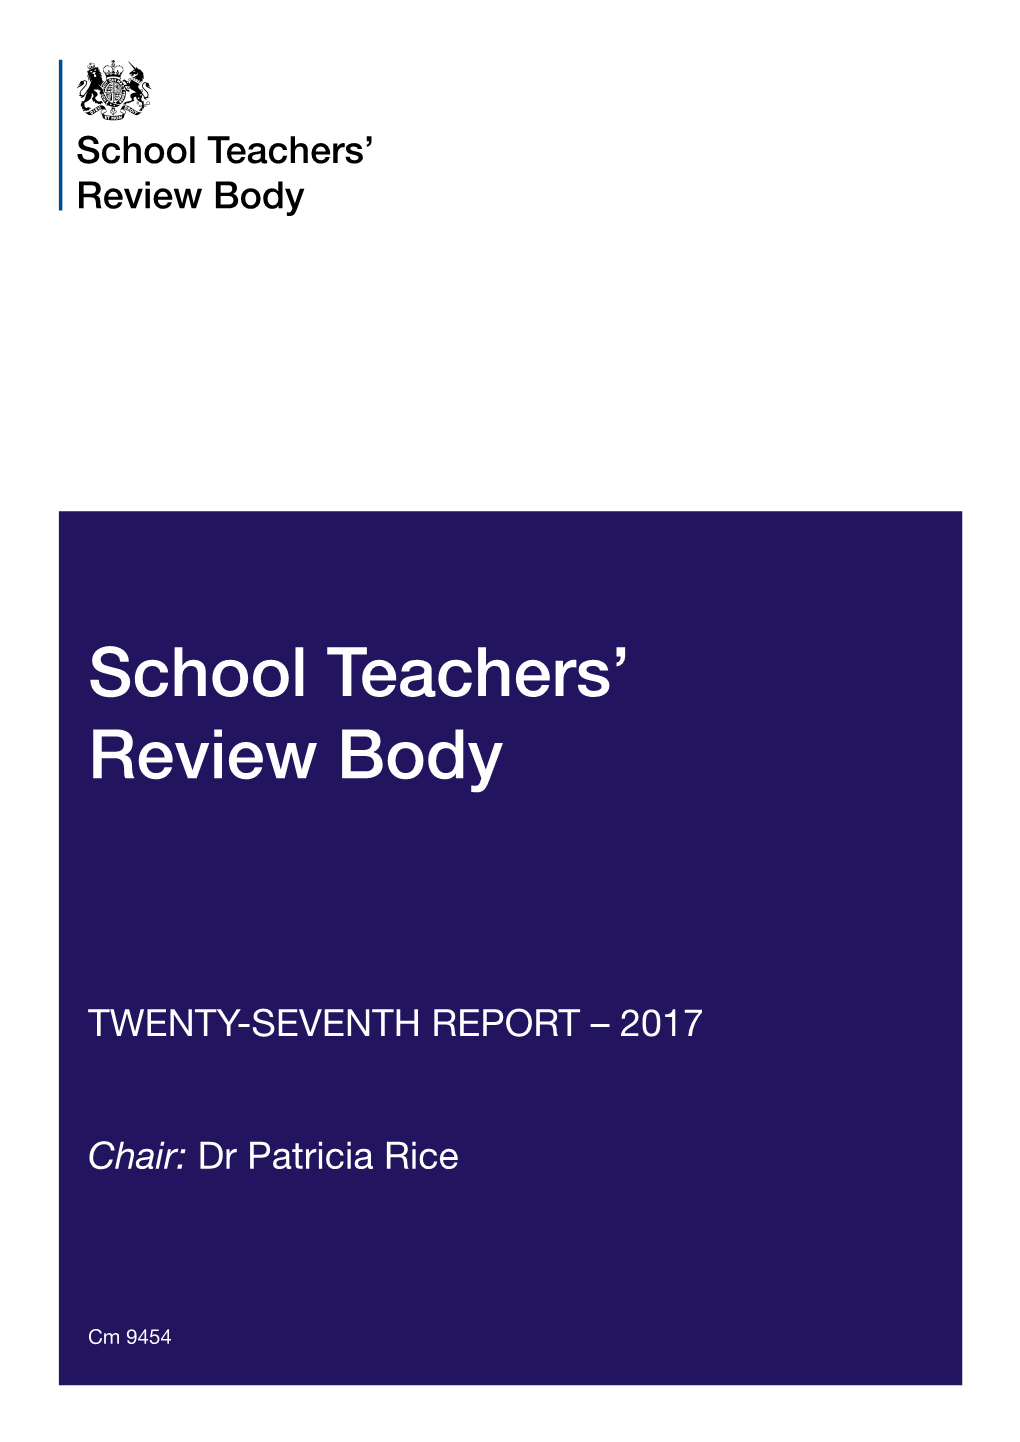 School Teachers Review Body